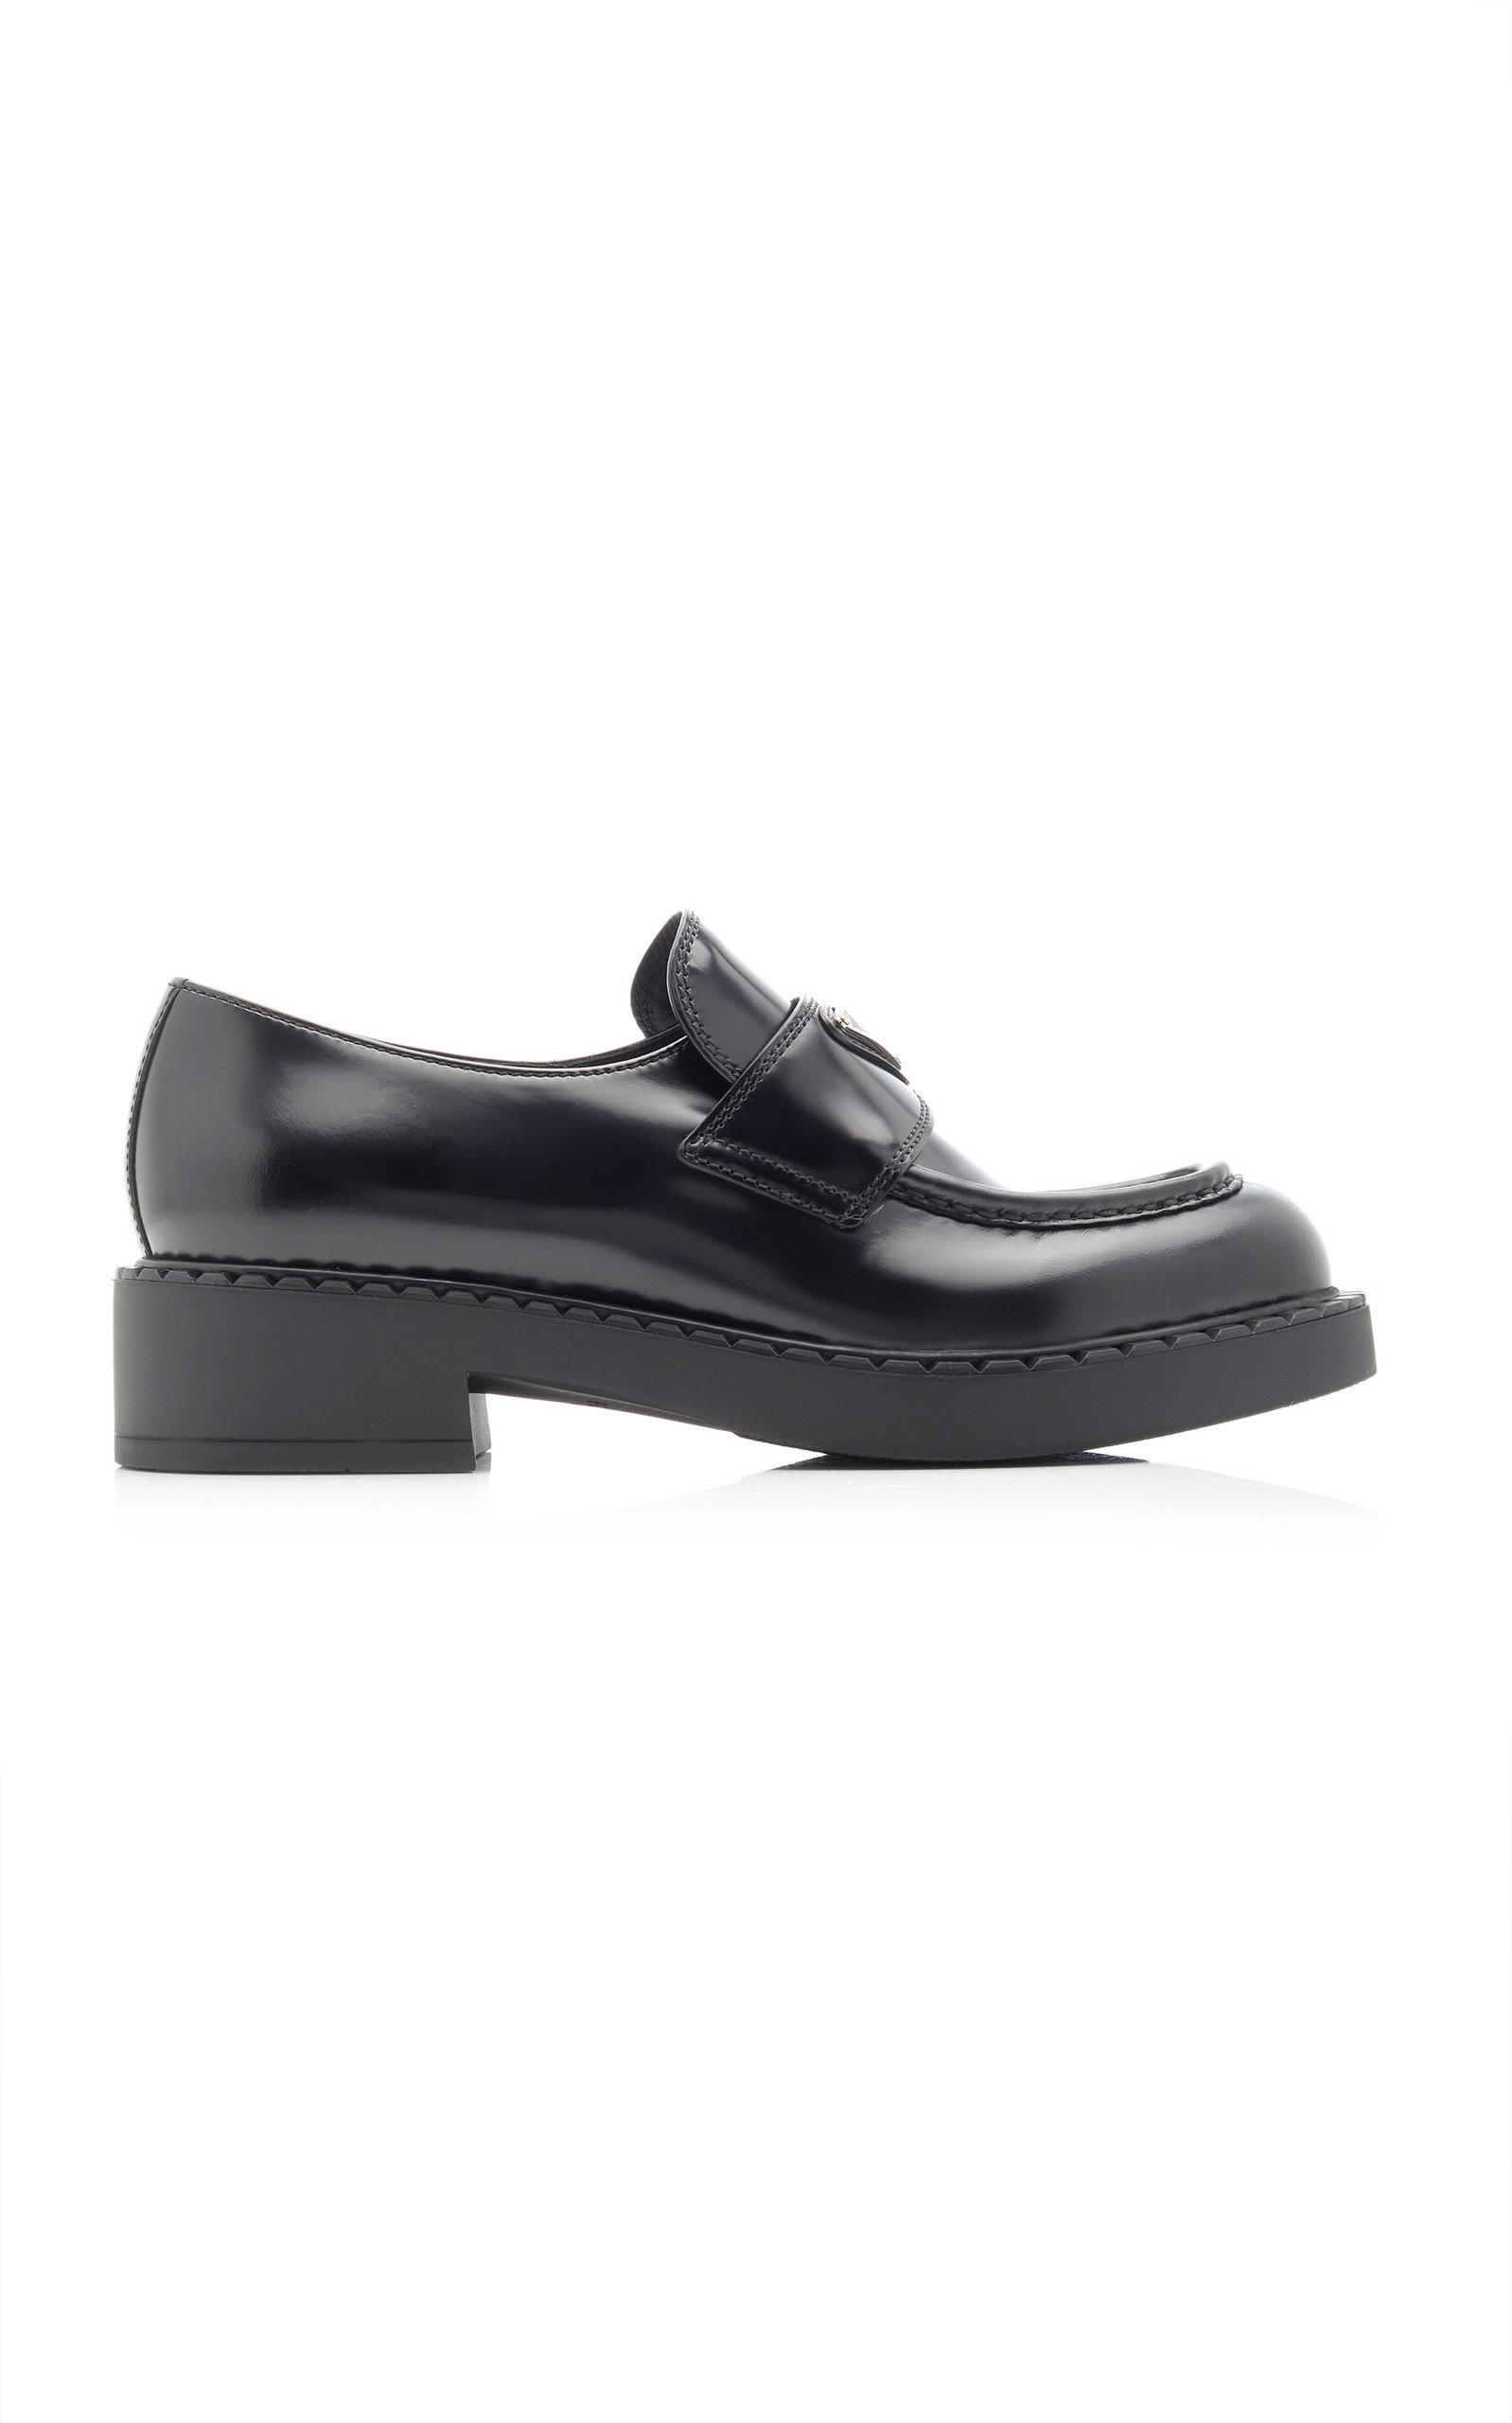 Prada - Leather Loafers  - Black - IT 41 - Moda Operandi